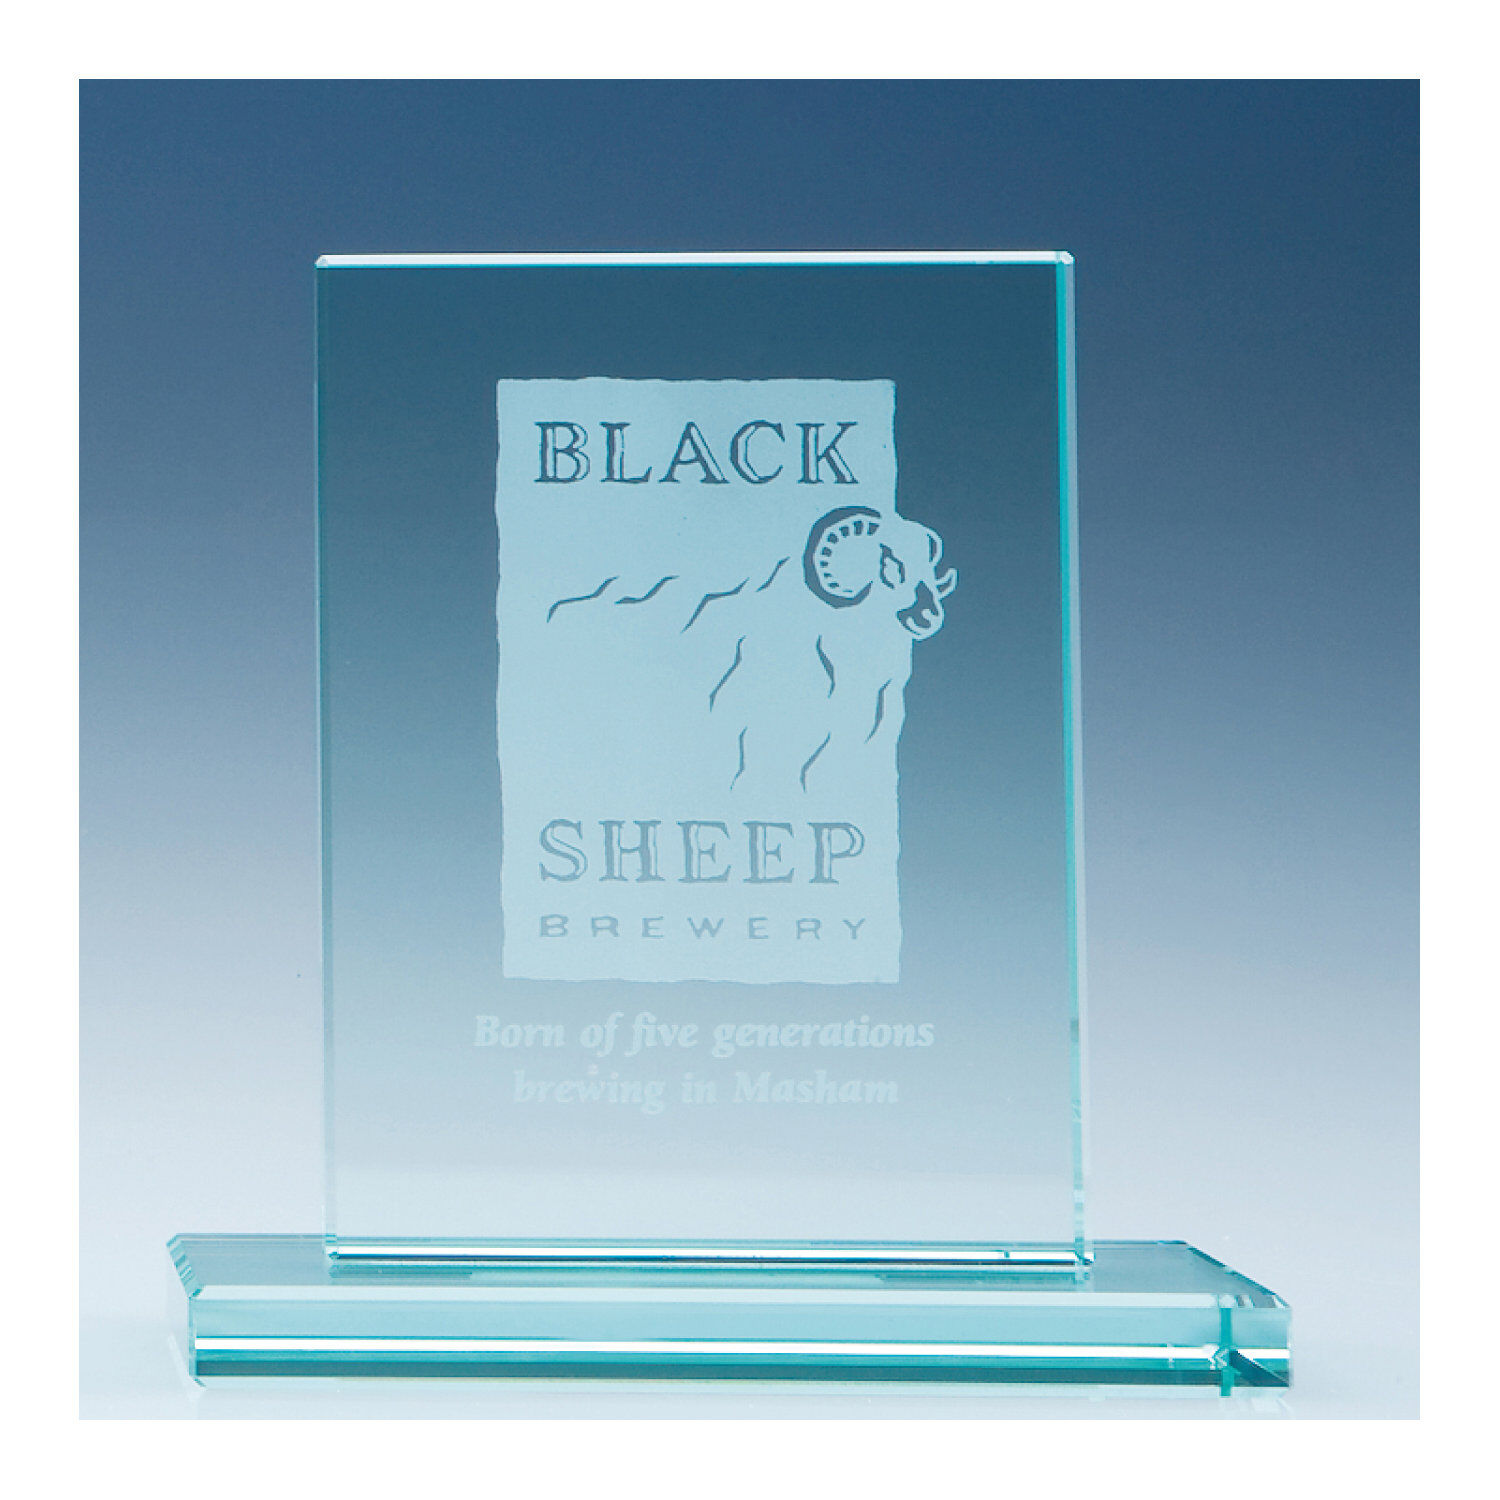 Flat Glass Presentation Awards Engraved